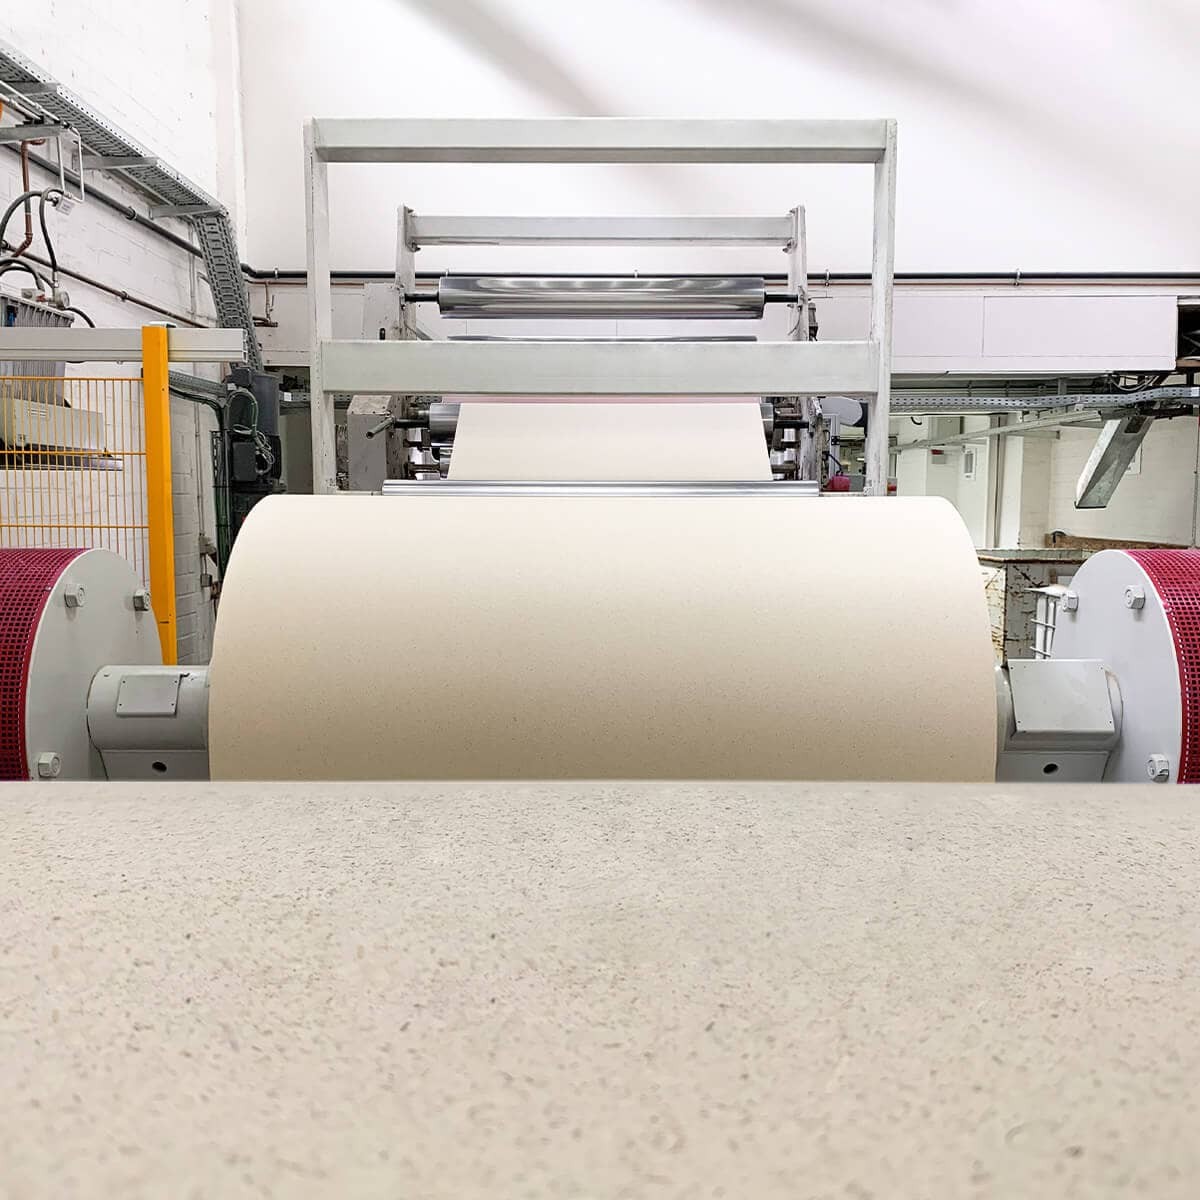 Reel-to-sheet lamination service example: graspaper